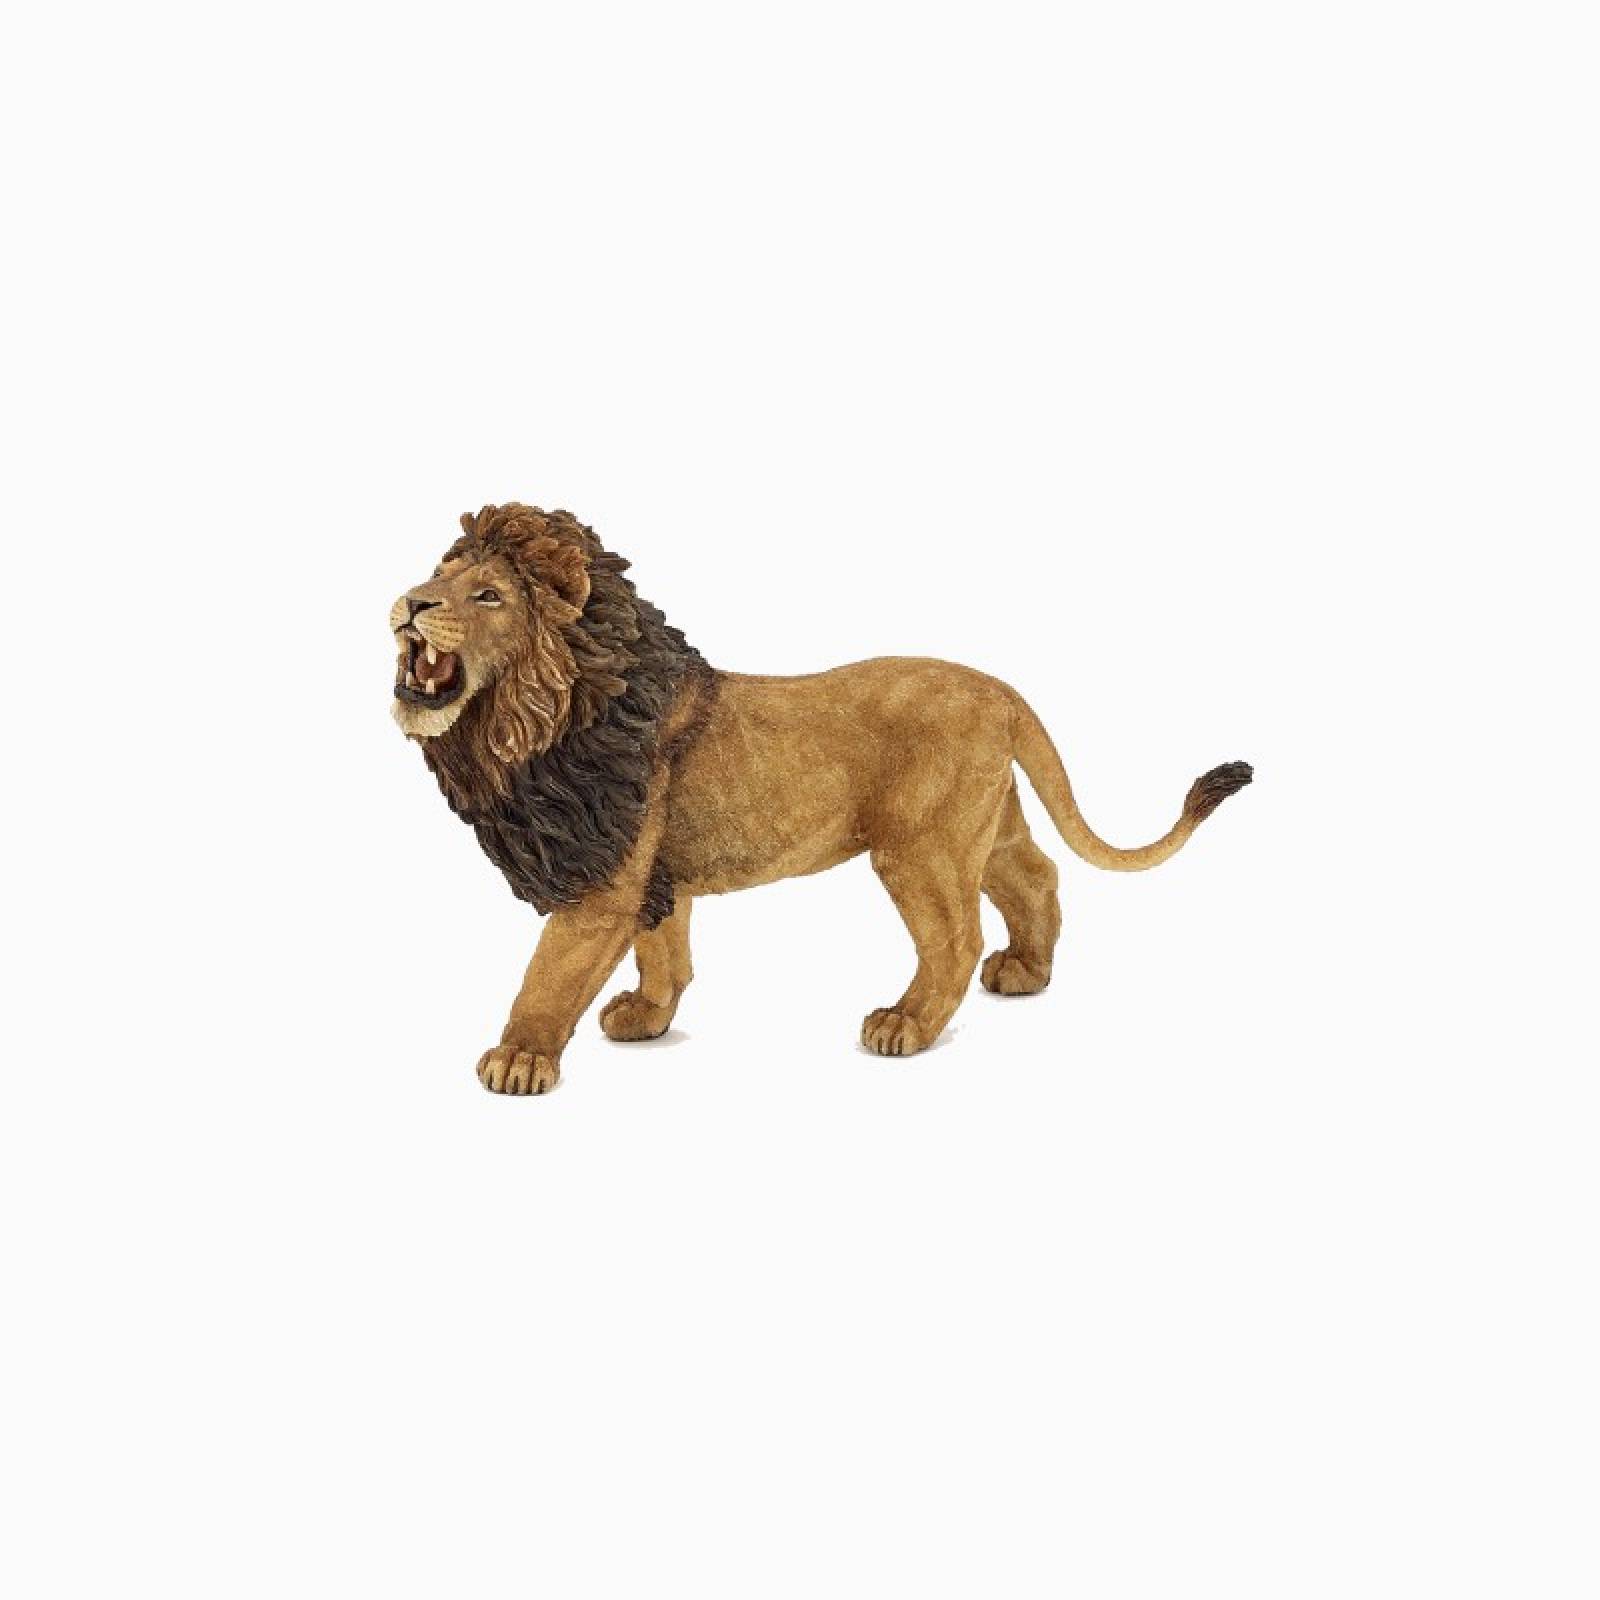 Roaring Lion - Papo Wild Animal Figure